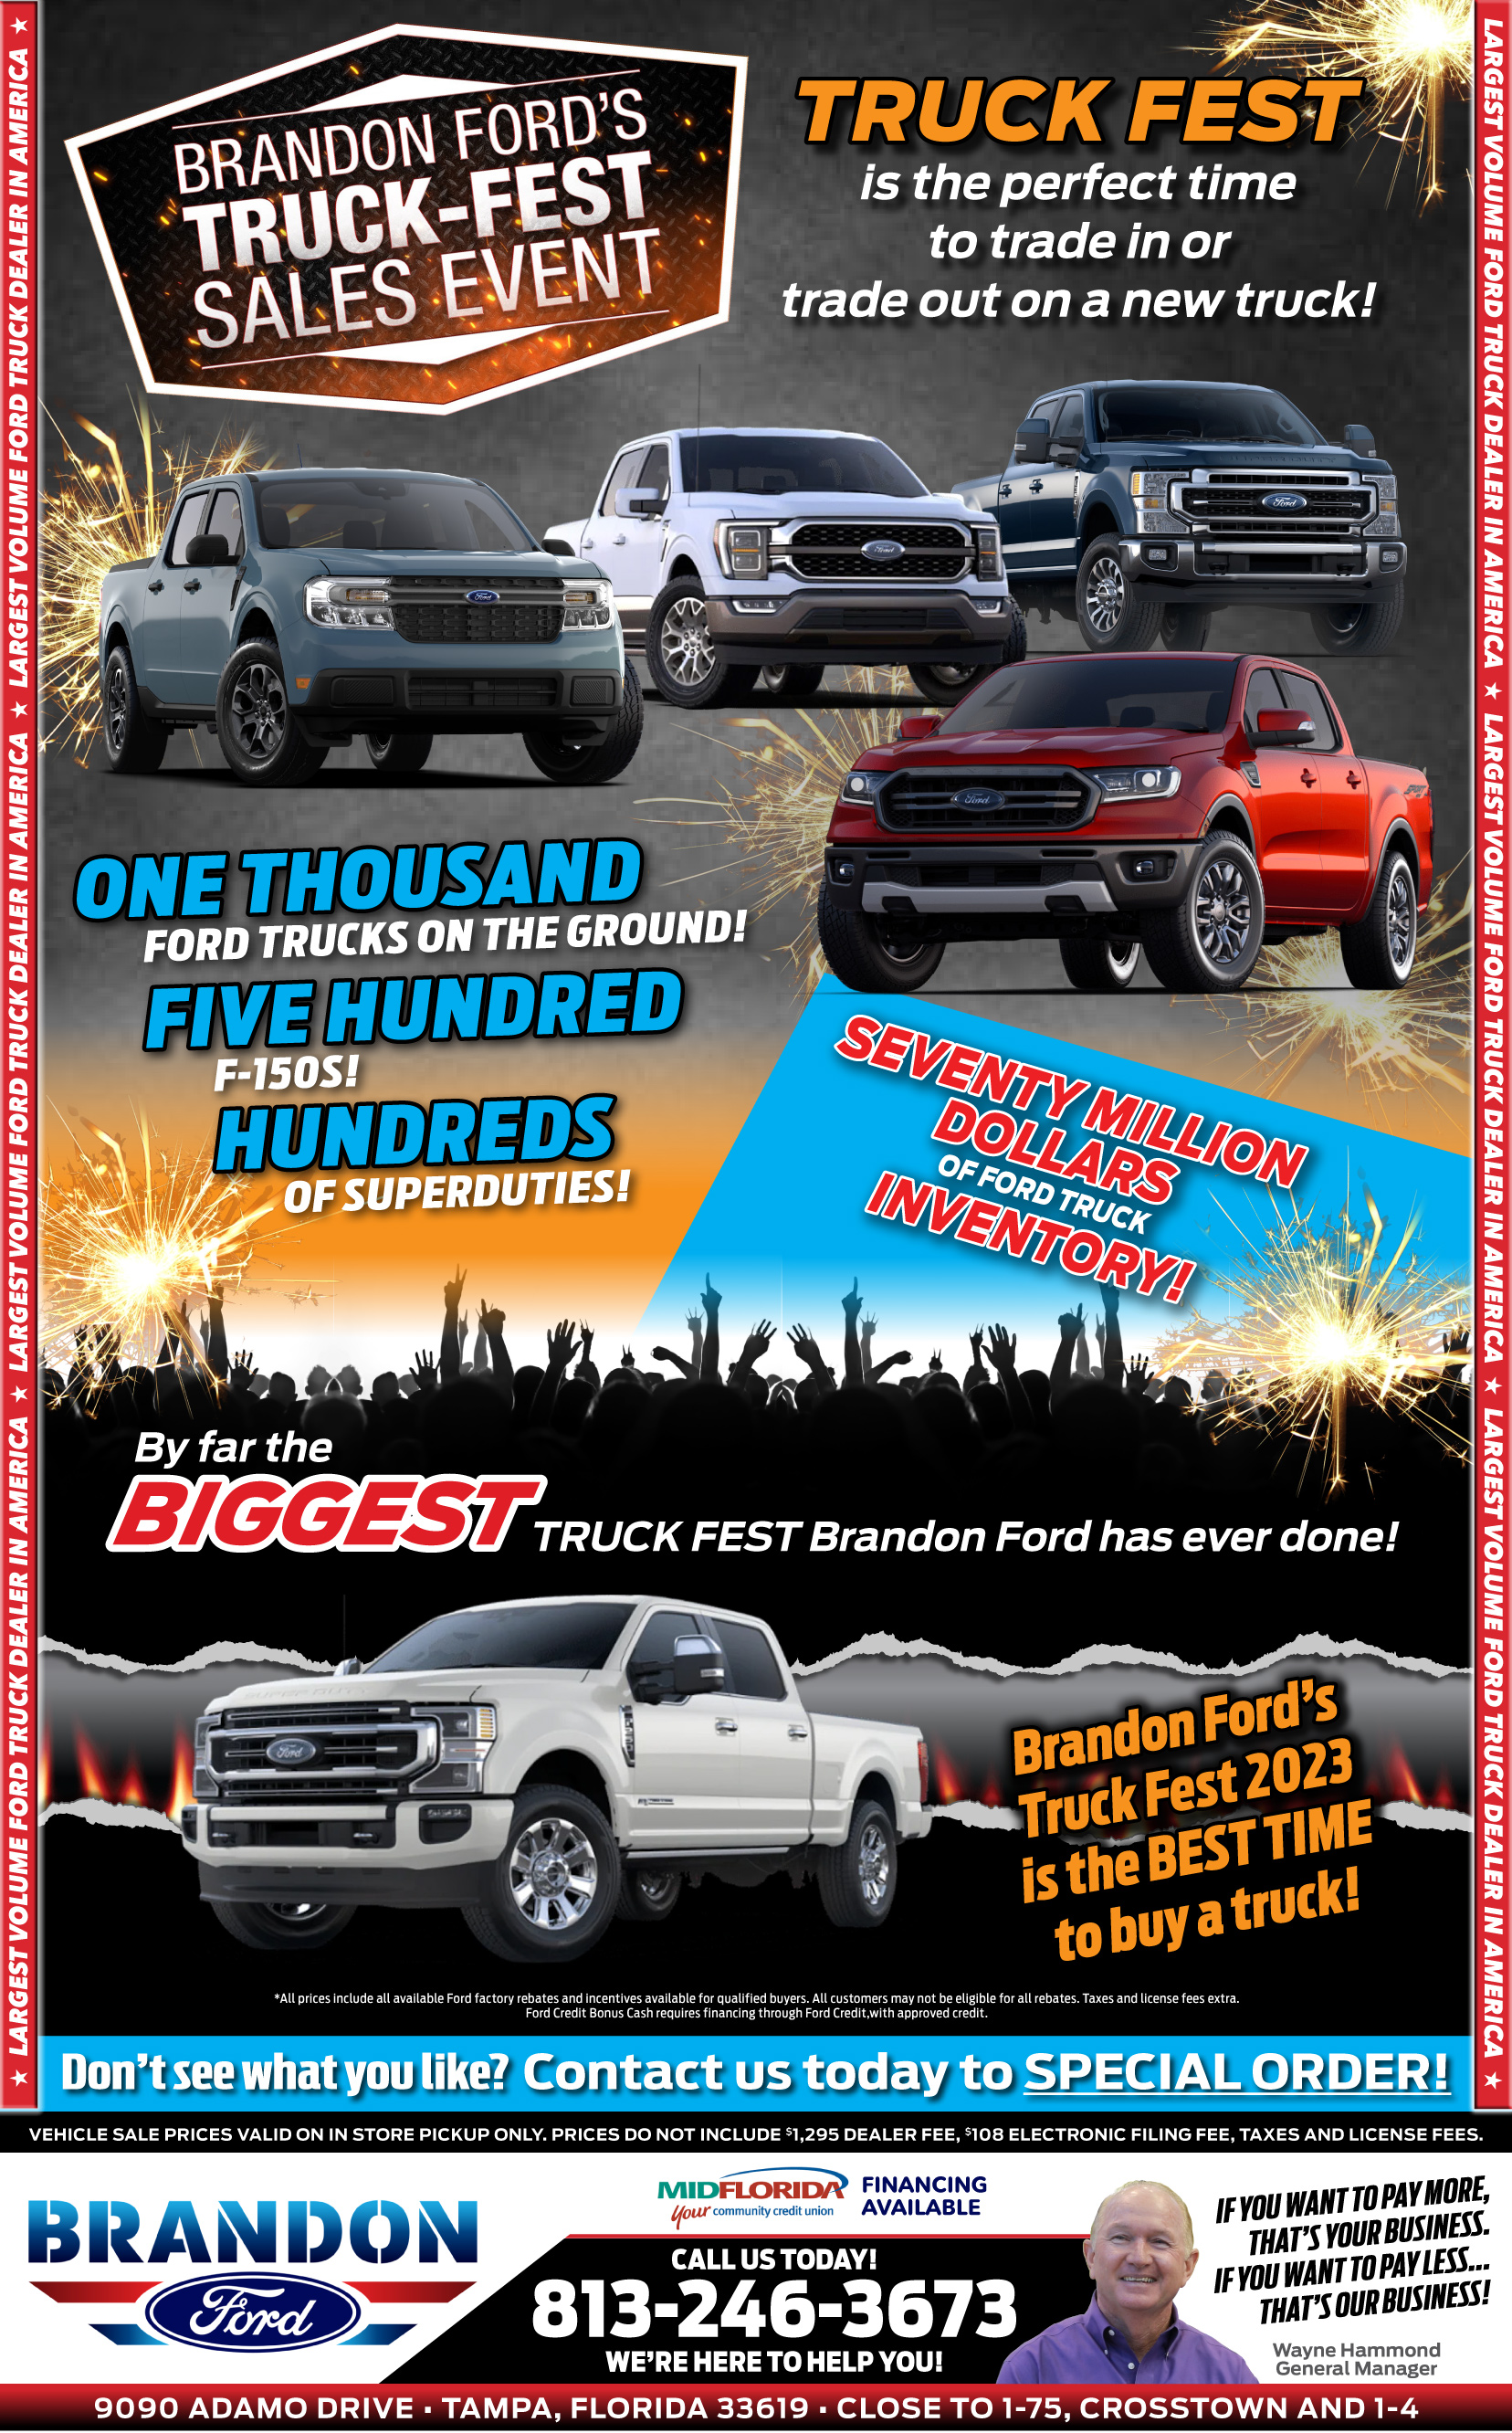 Truck-Fest Sales Event